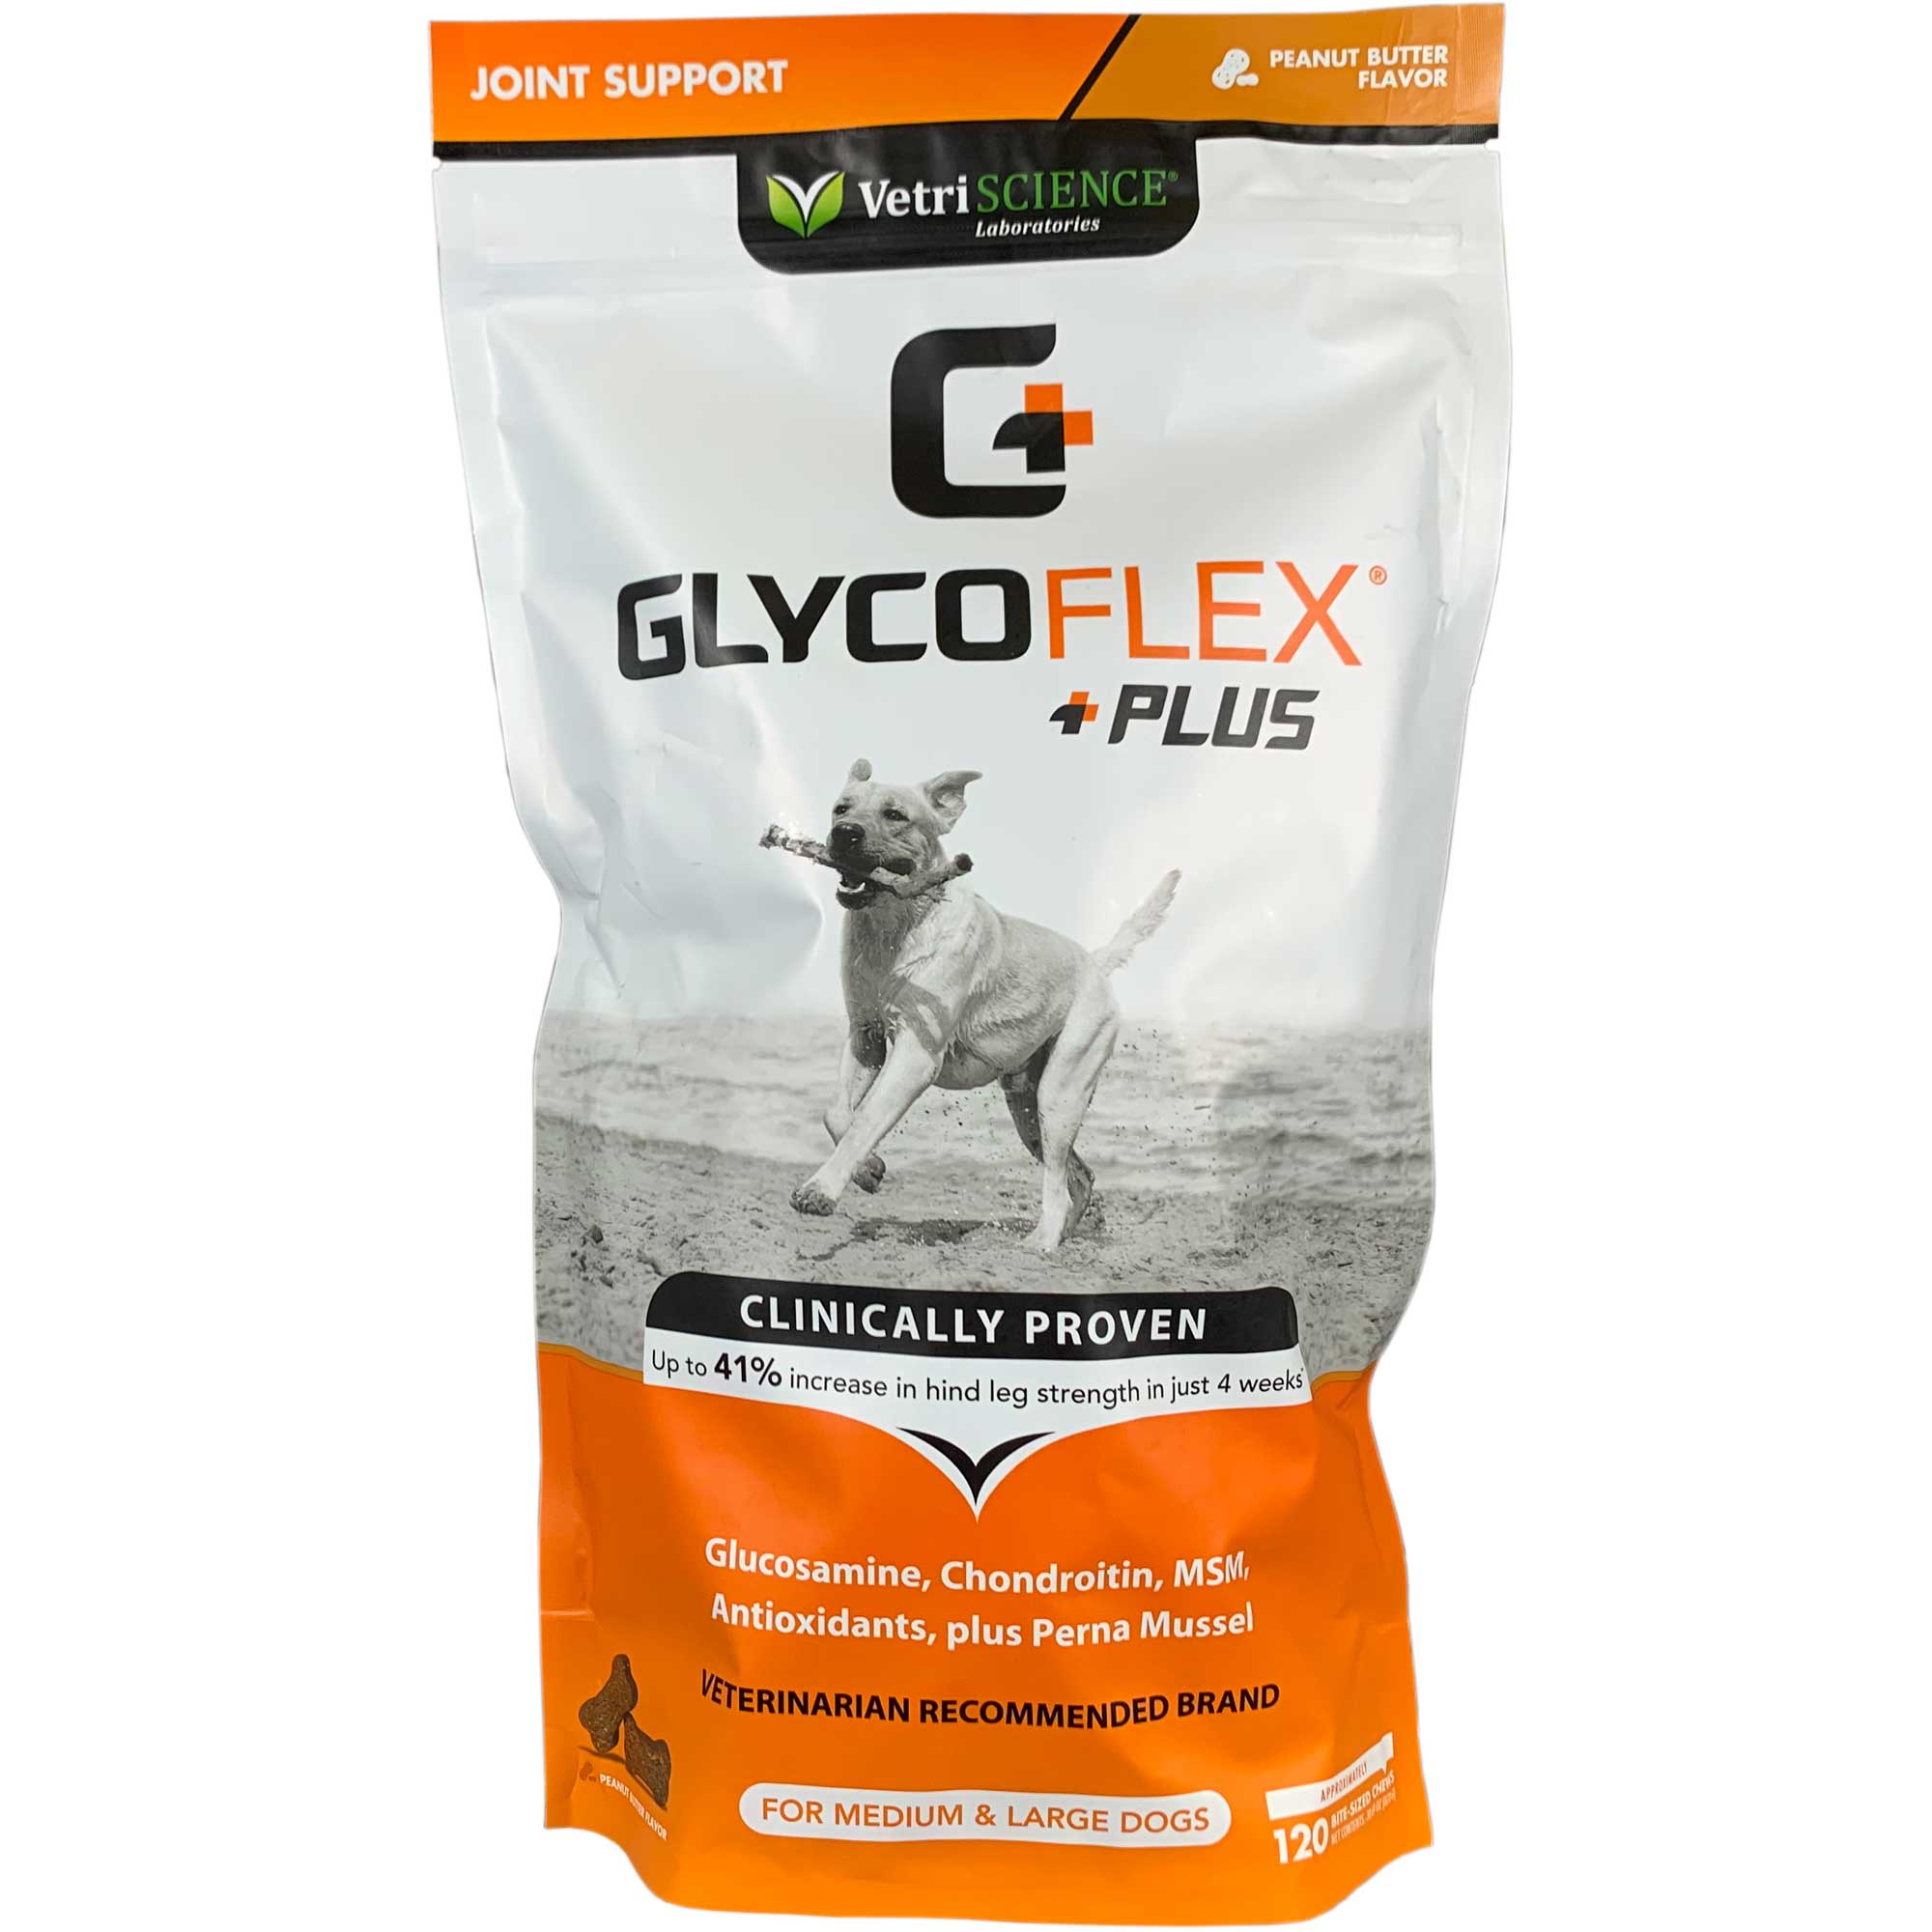 GlycoFlex Plus Usage